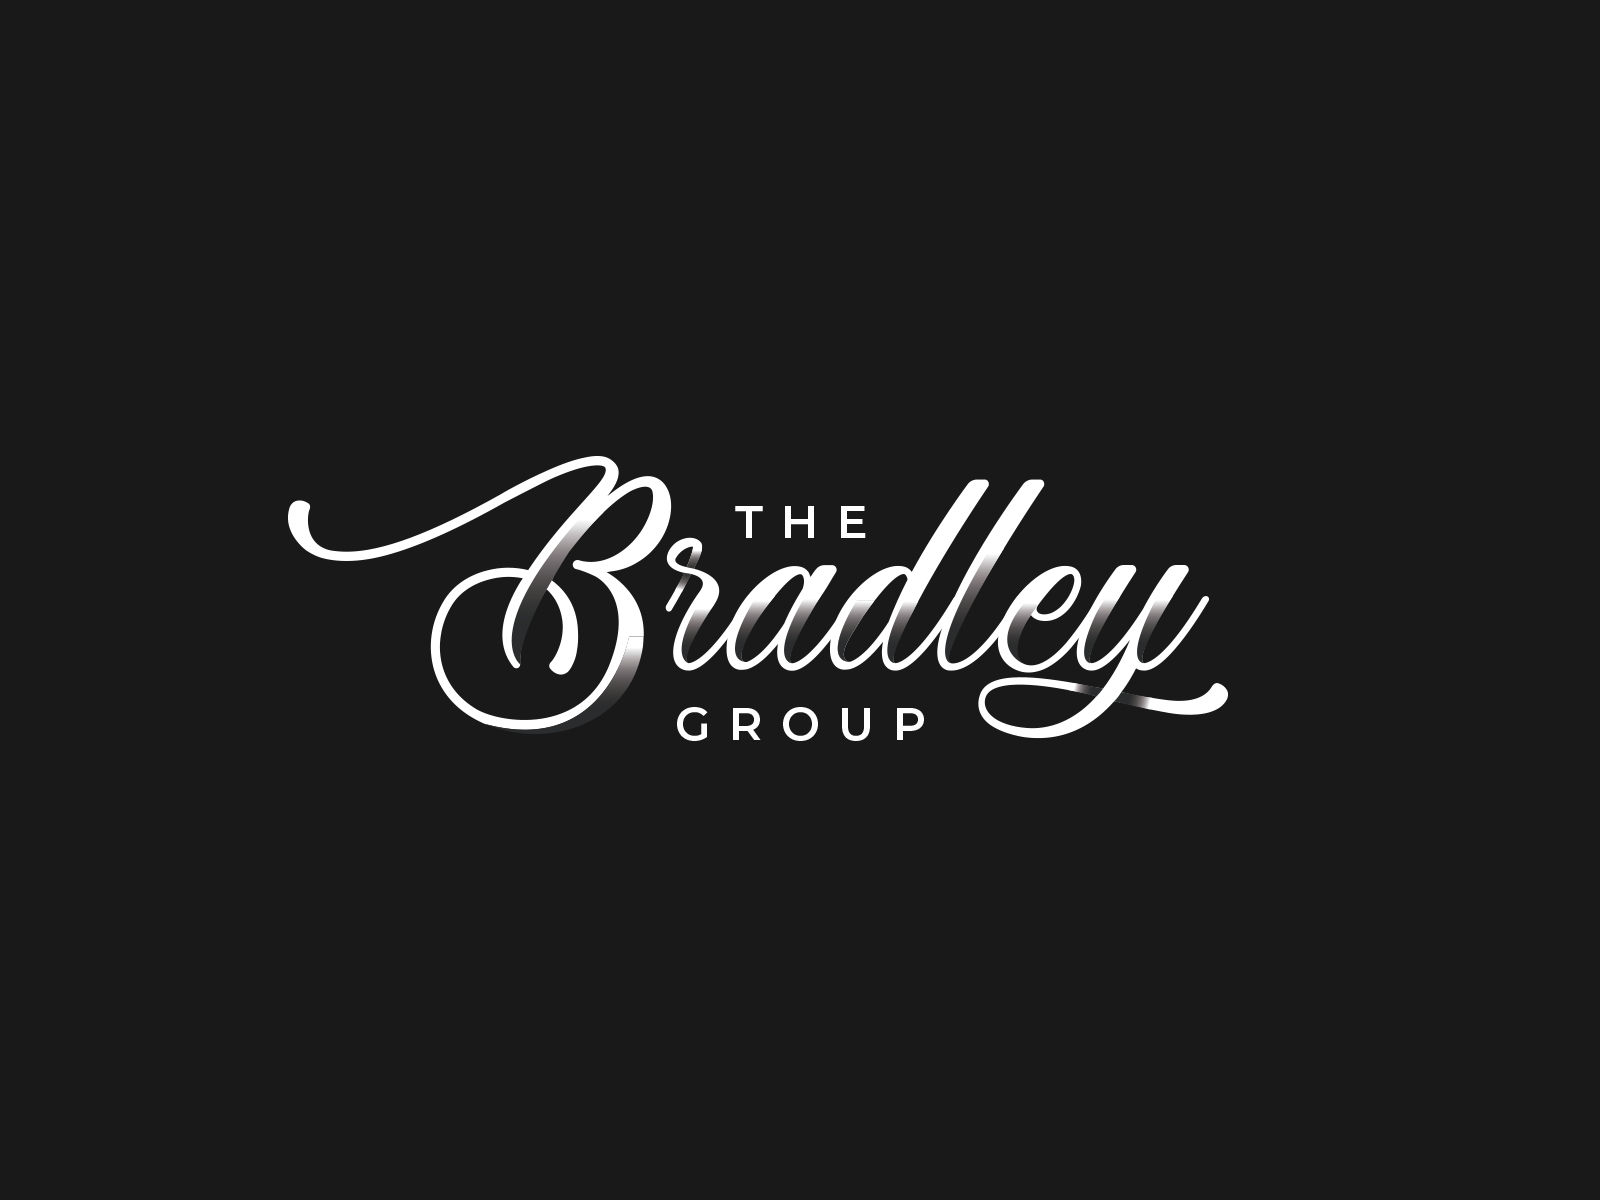 The Bradley Group by Ismael Cárdenas on Dribbble